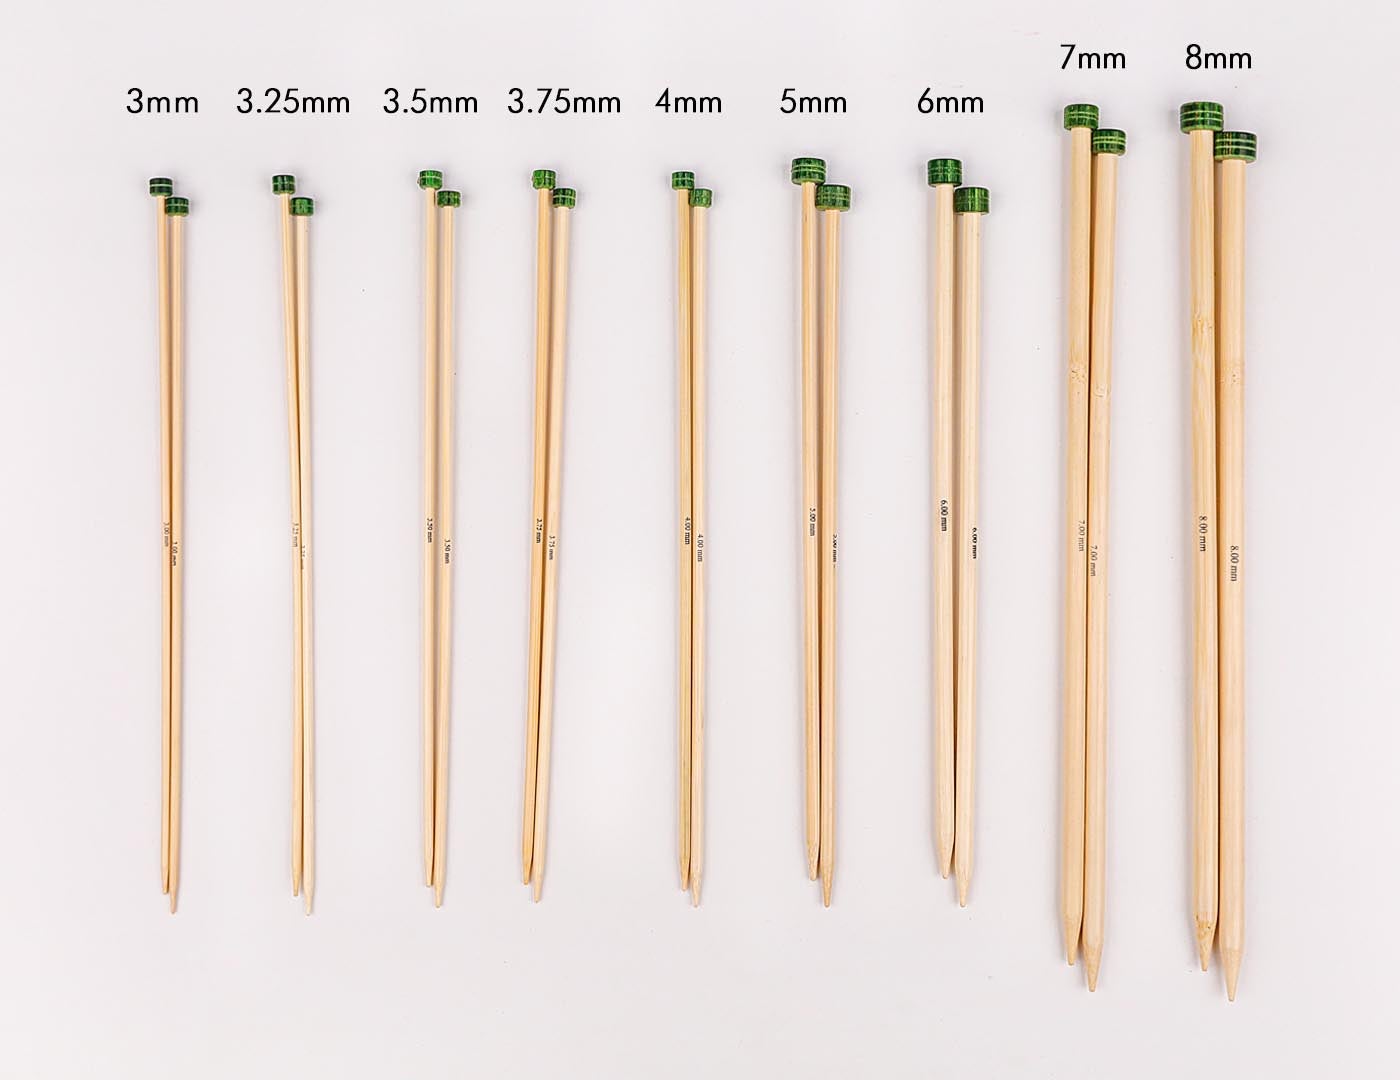 Asian Bamboo Knitting Needles